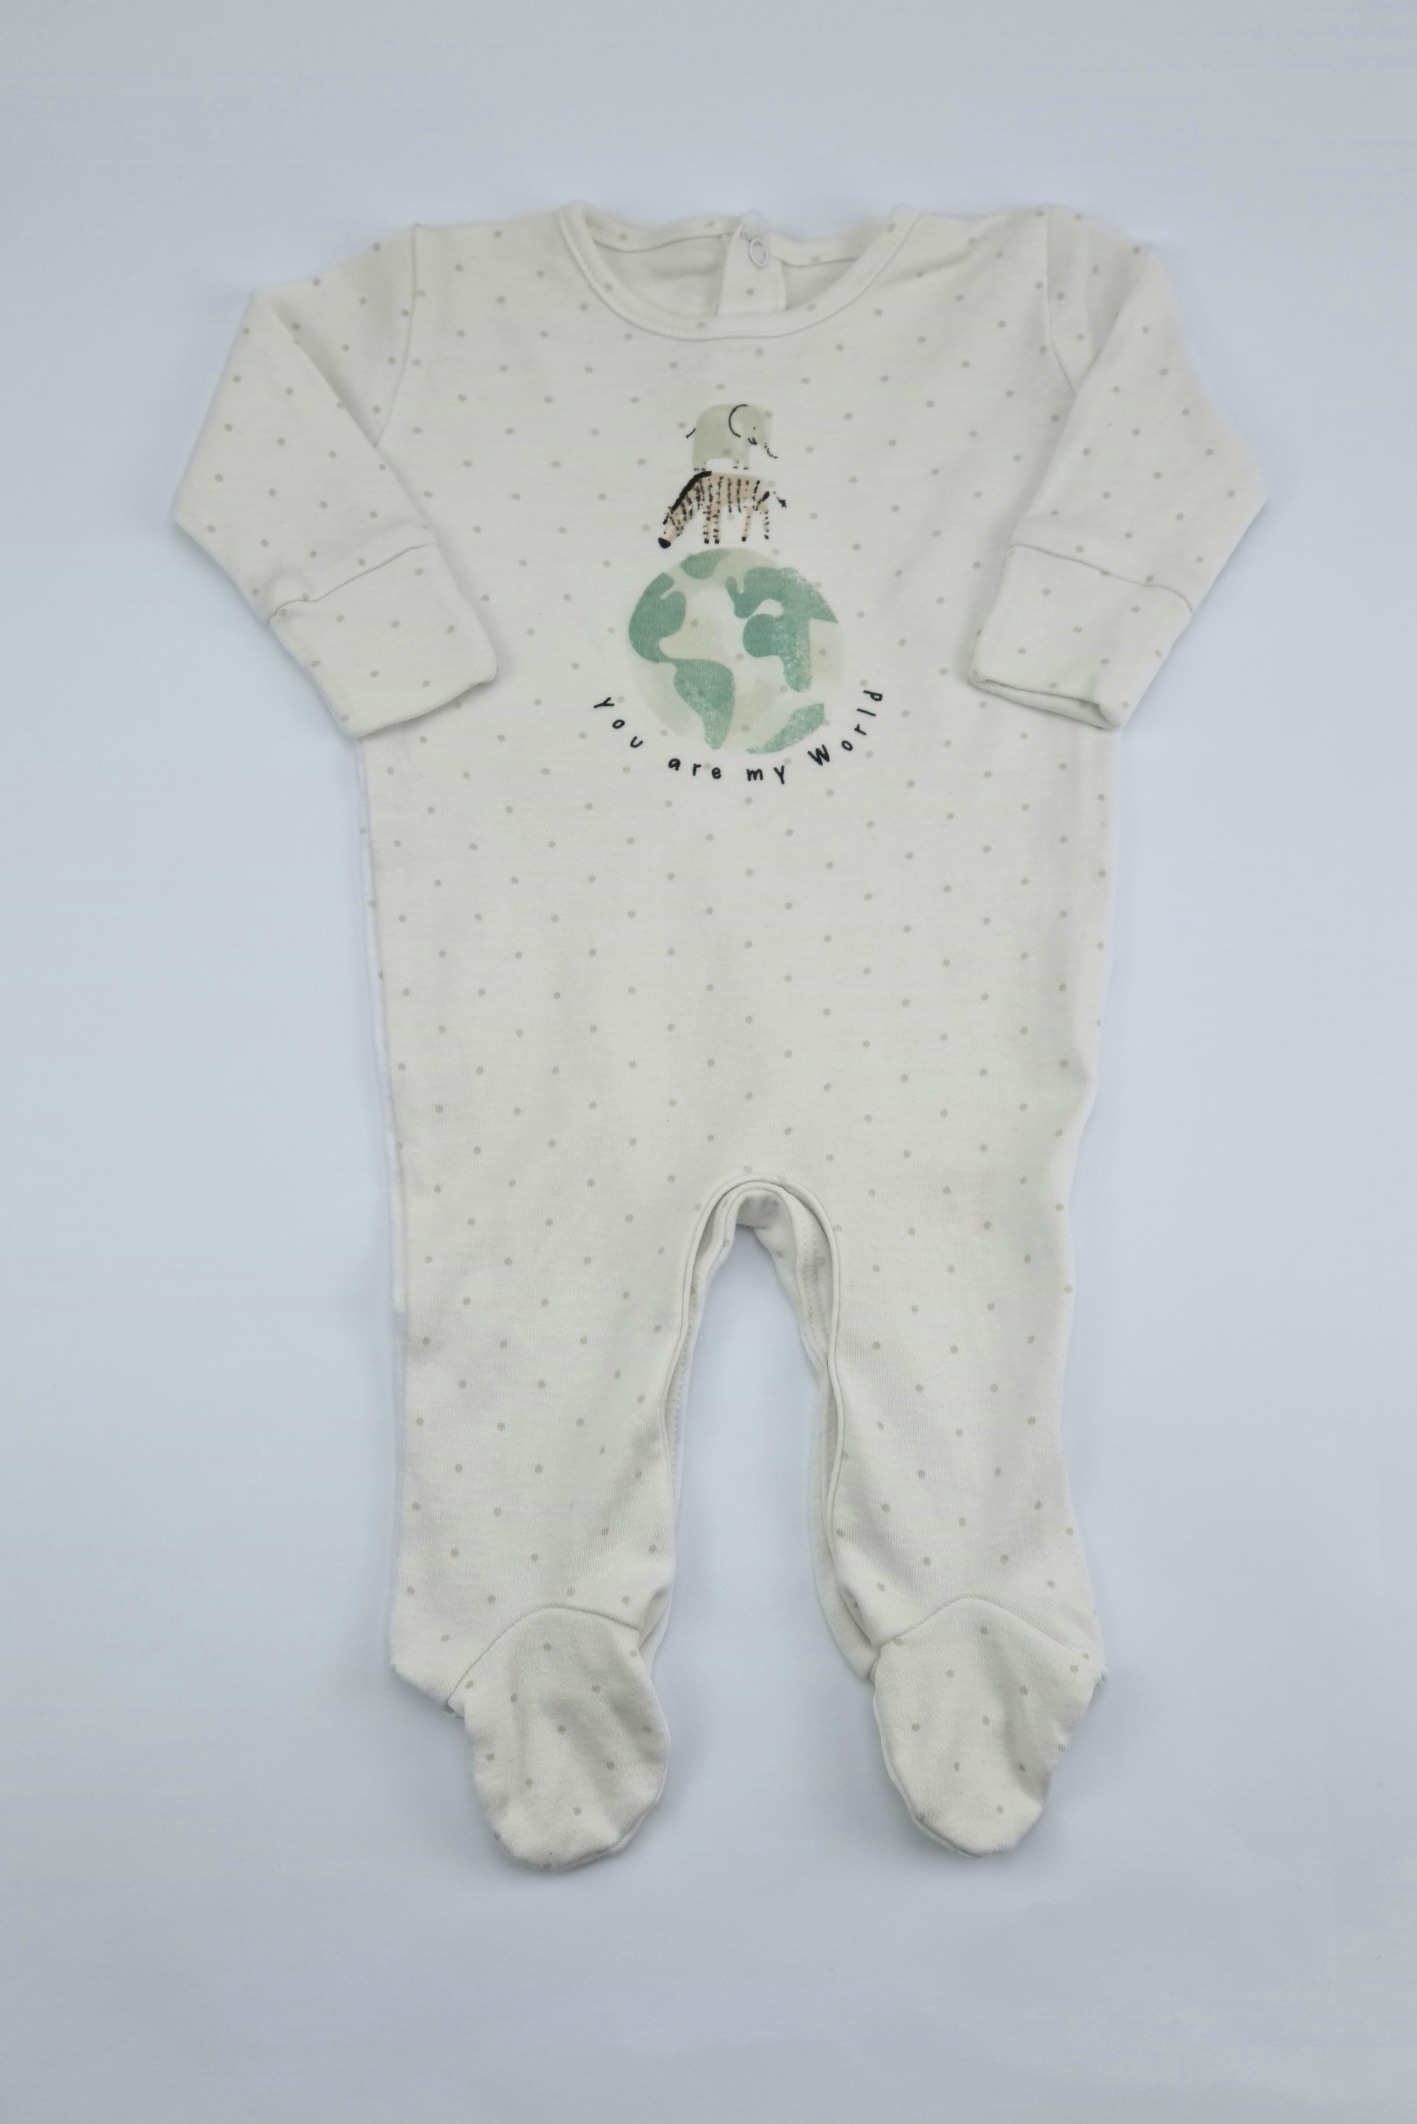 Newborn - 10lbs 4.5kg 'You Are My World' Spot Print Sleepsuit (Matalan)